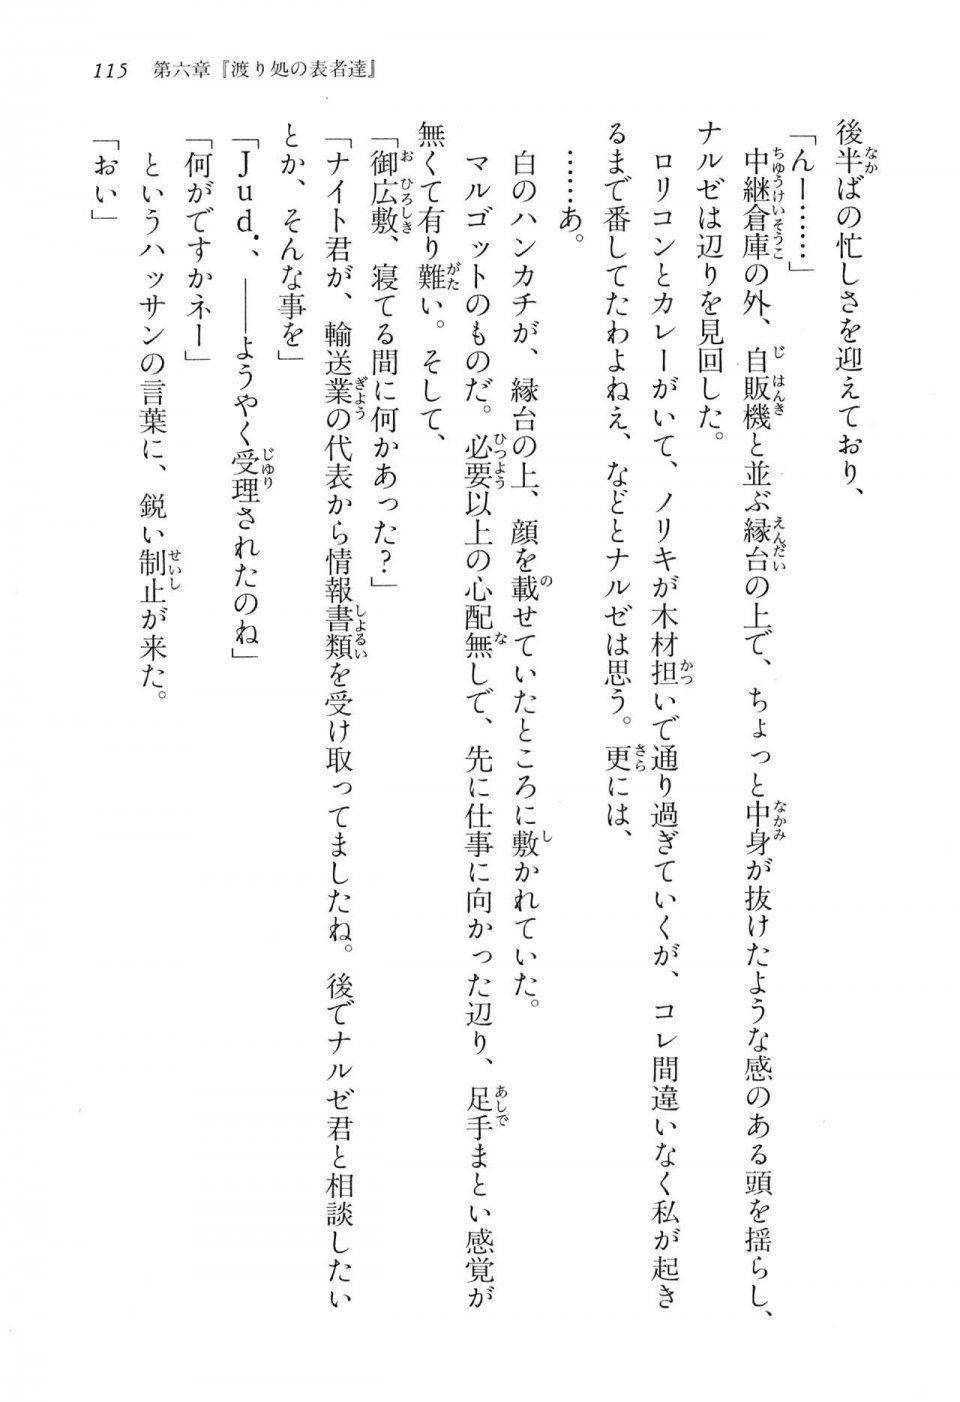 Kyoukai Senjou no Horizon BD Special Mininovel Vol 2(1B) - Photo #119